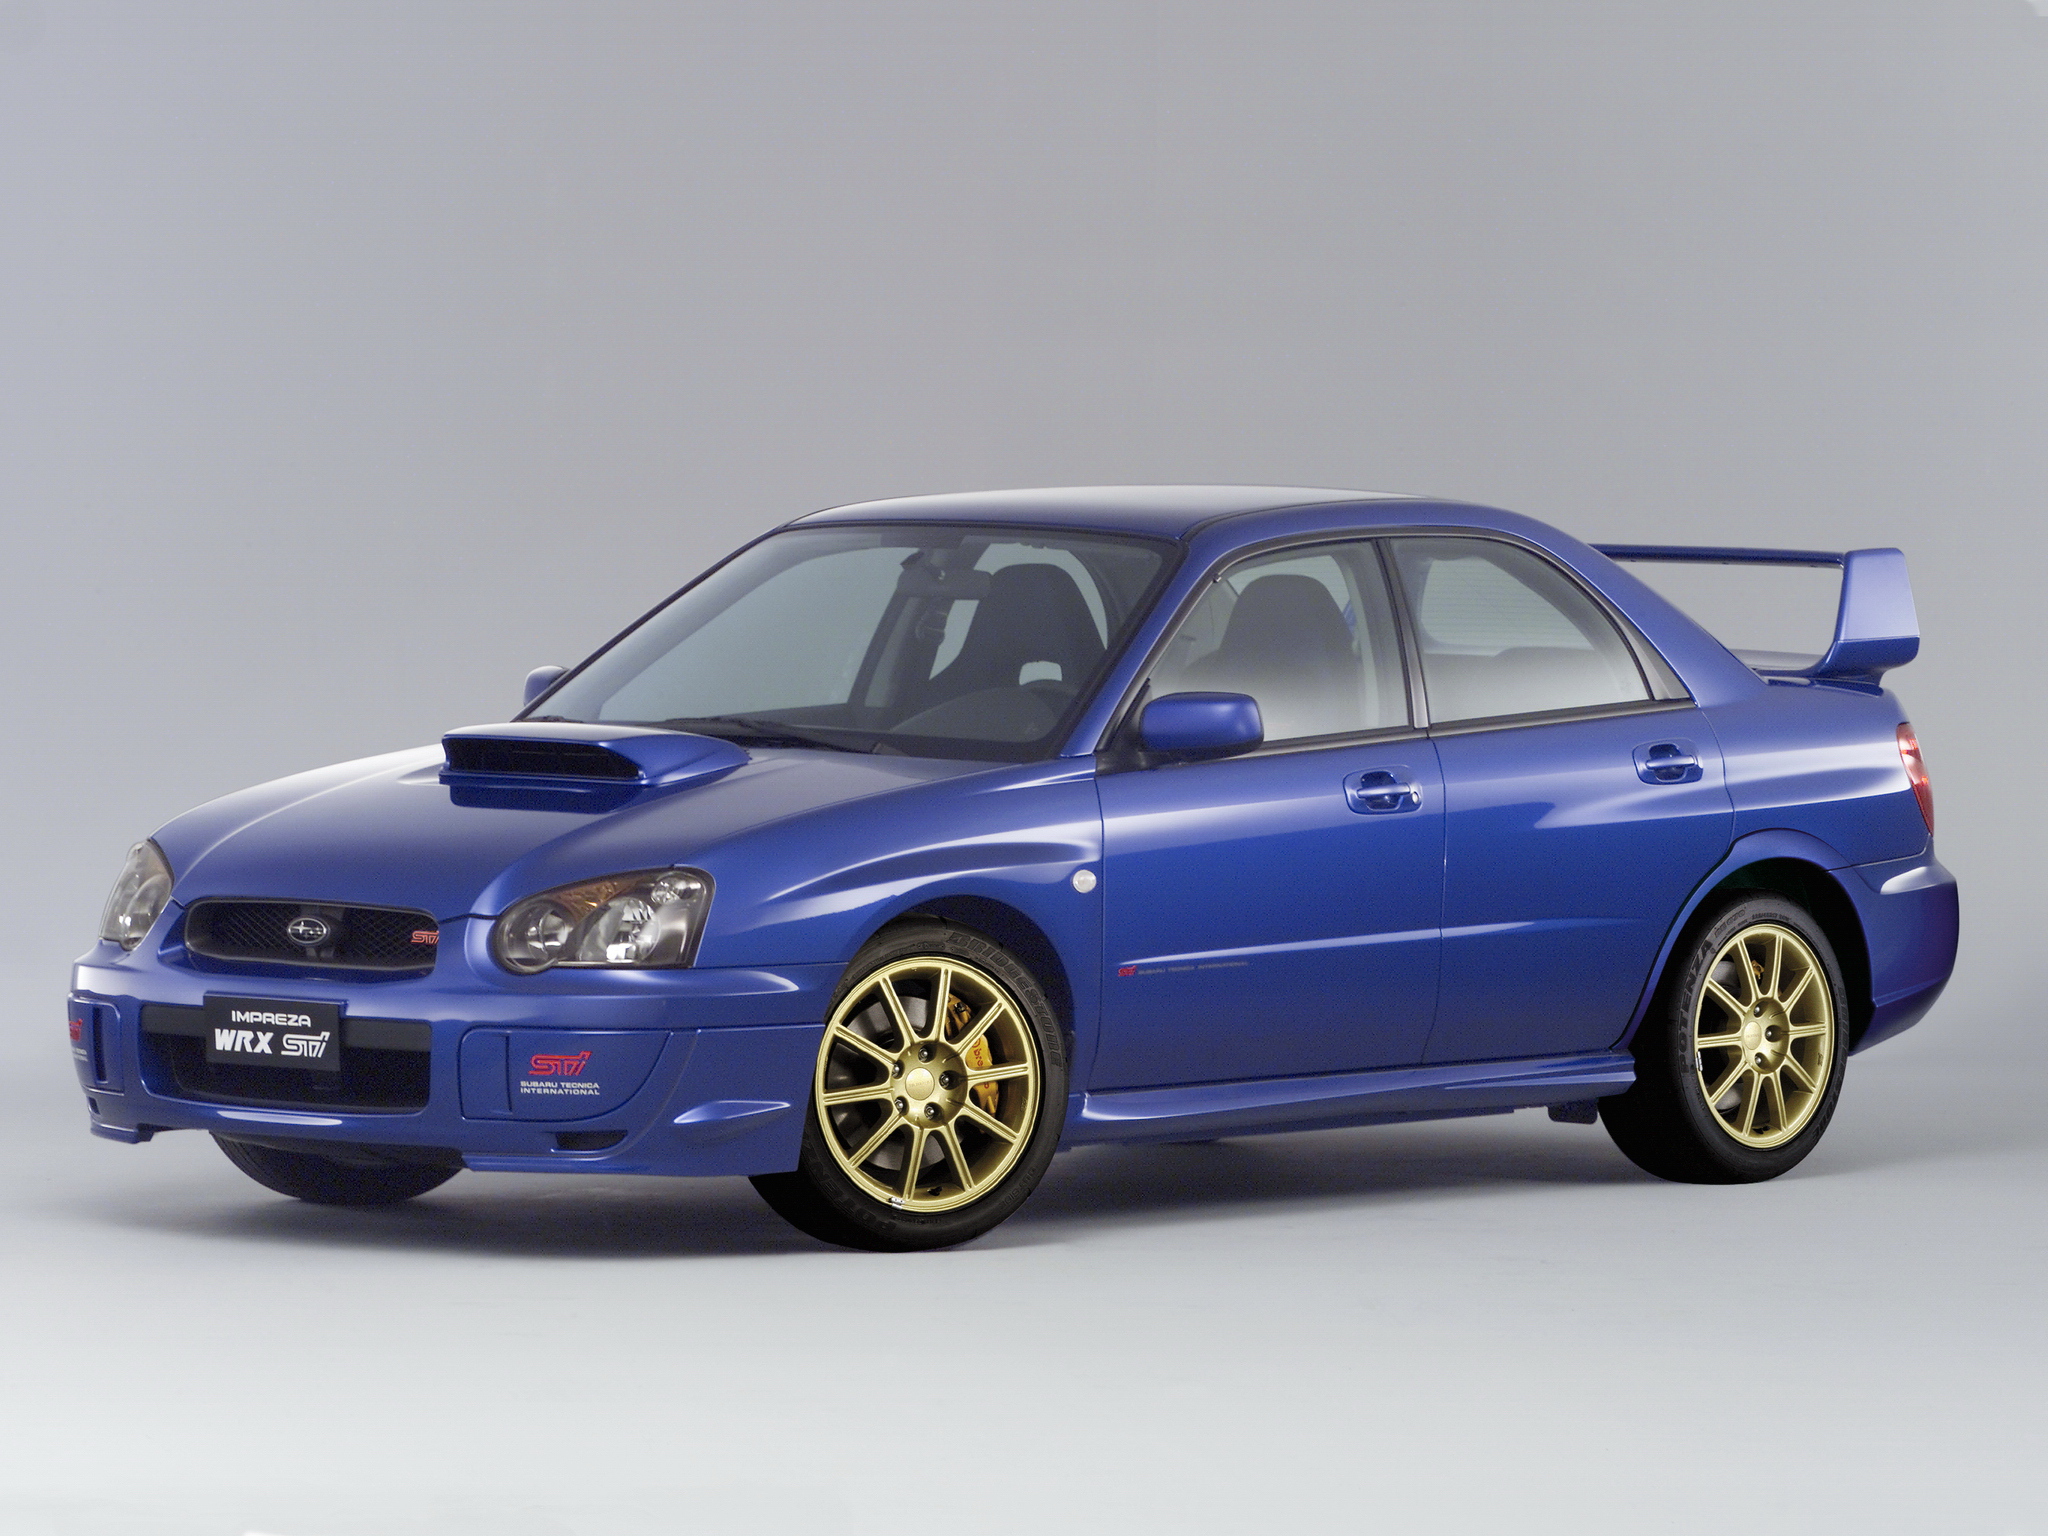 Subaru wrx 2004. Subaru Impreza WRX STI 2004. Subaru Impreza WRX STI 2005. Subaru Impreza WRX 2004. Subaru Impreza WRX STI 2003.